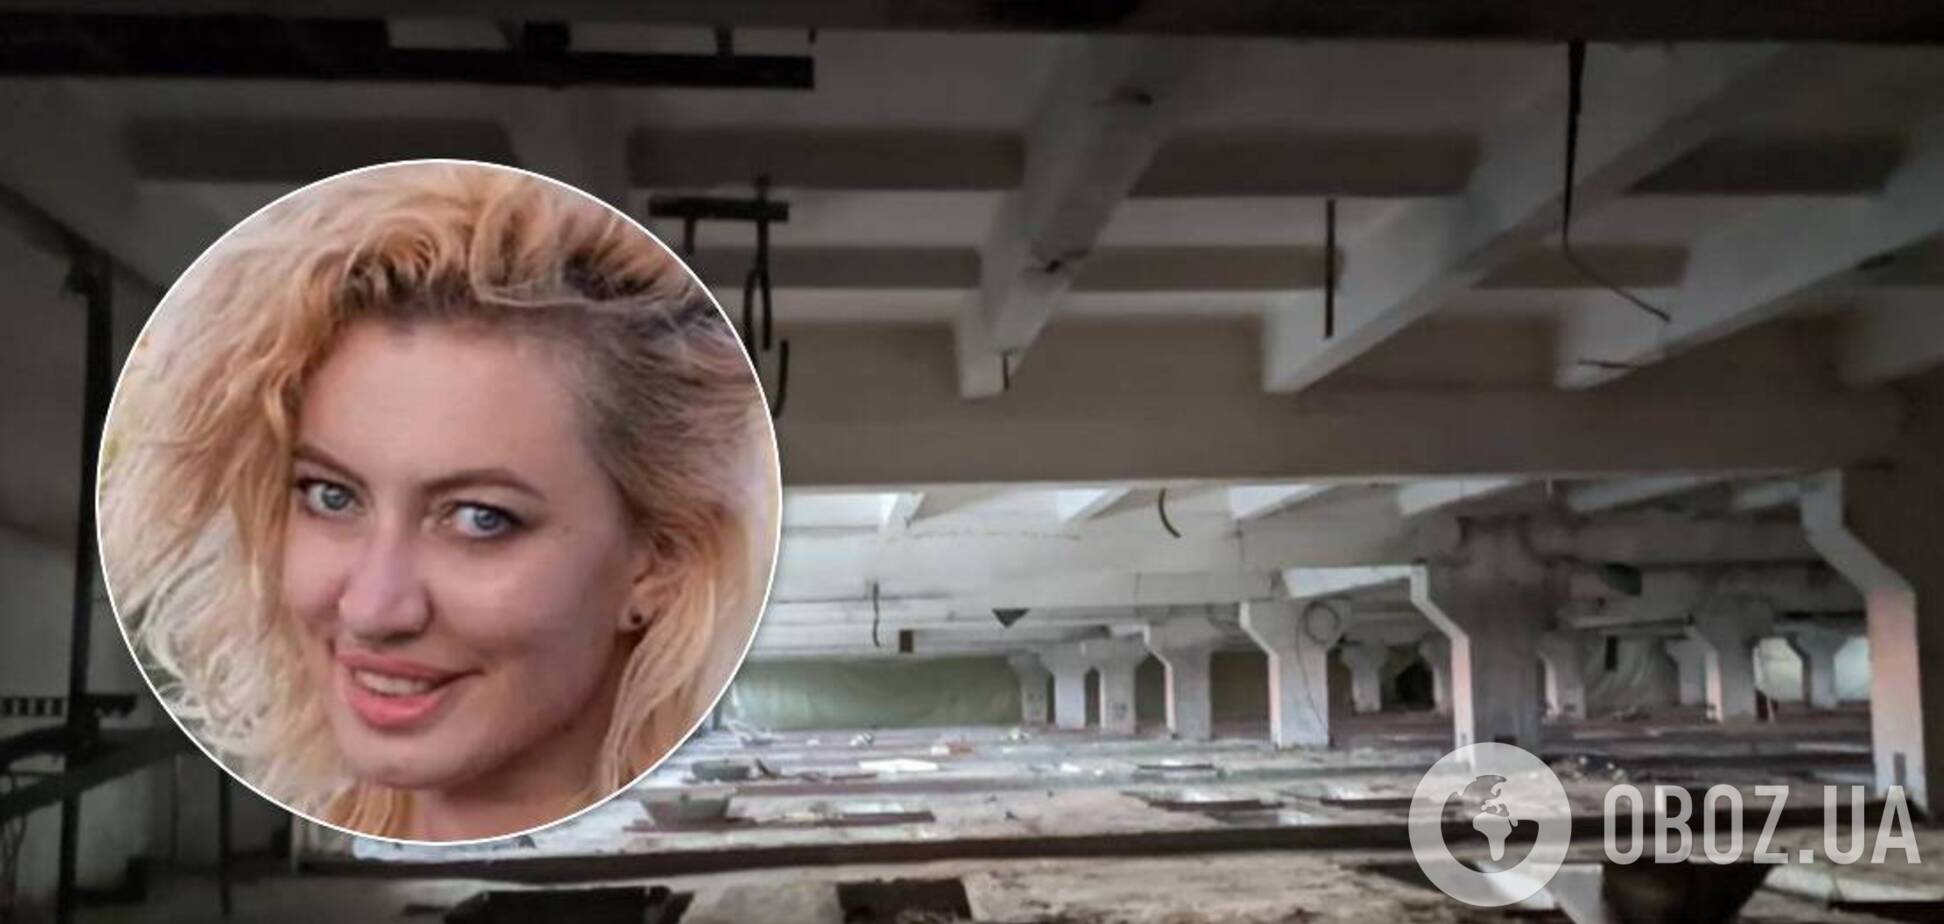 Сама пошла на крышу: детали гибели девушки-фотографа в Харькове